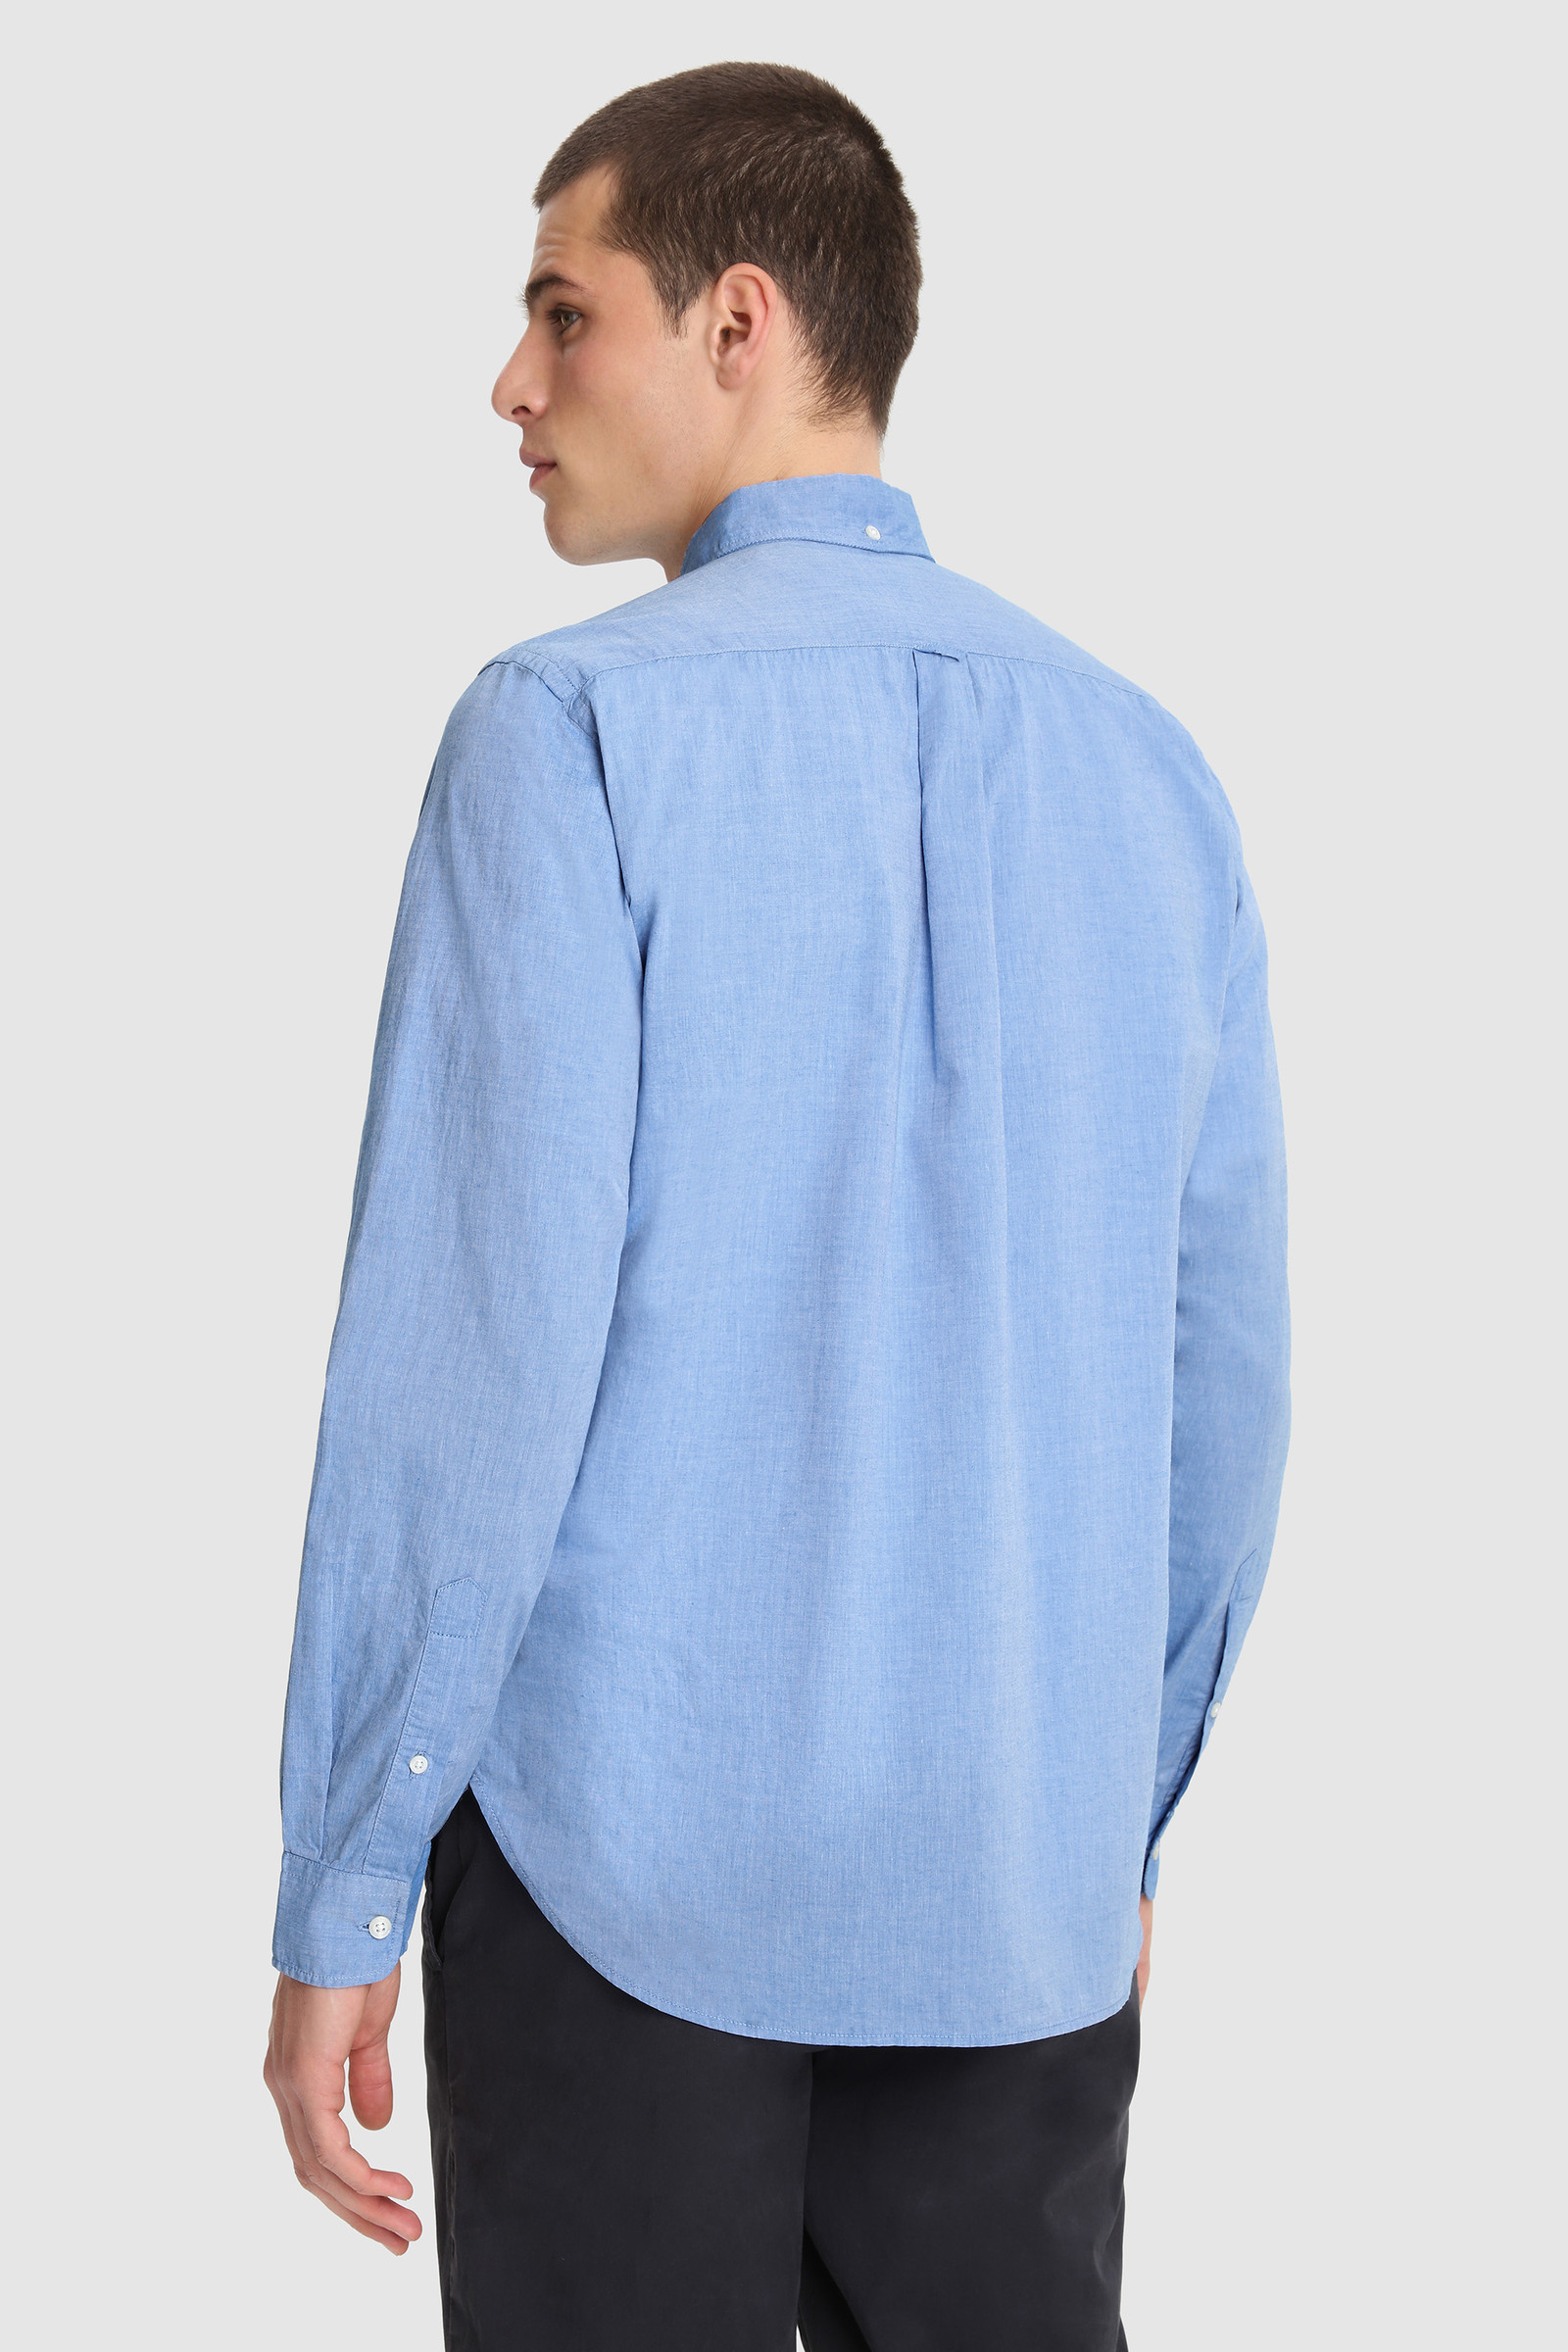 Chambray Button-Down Shirt in Light Cotton - Men - Blue